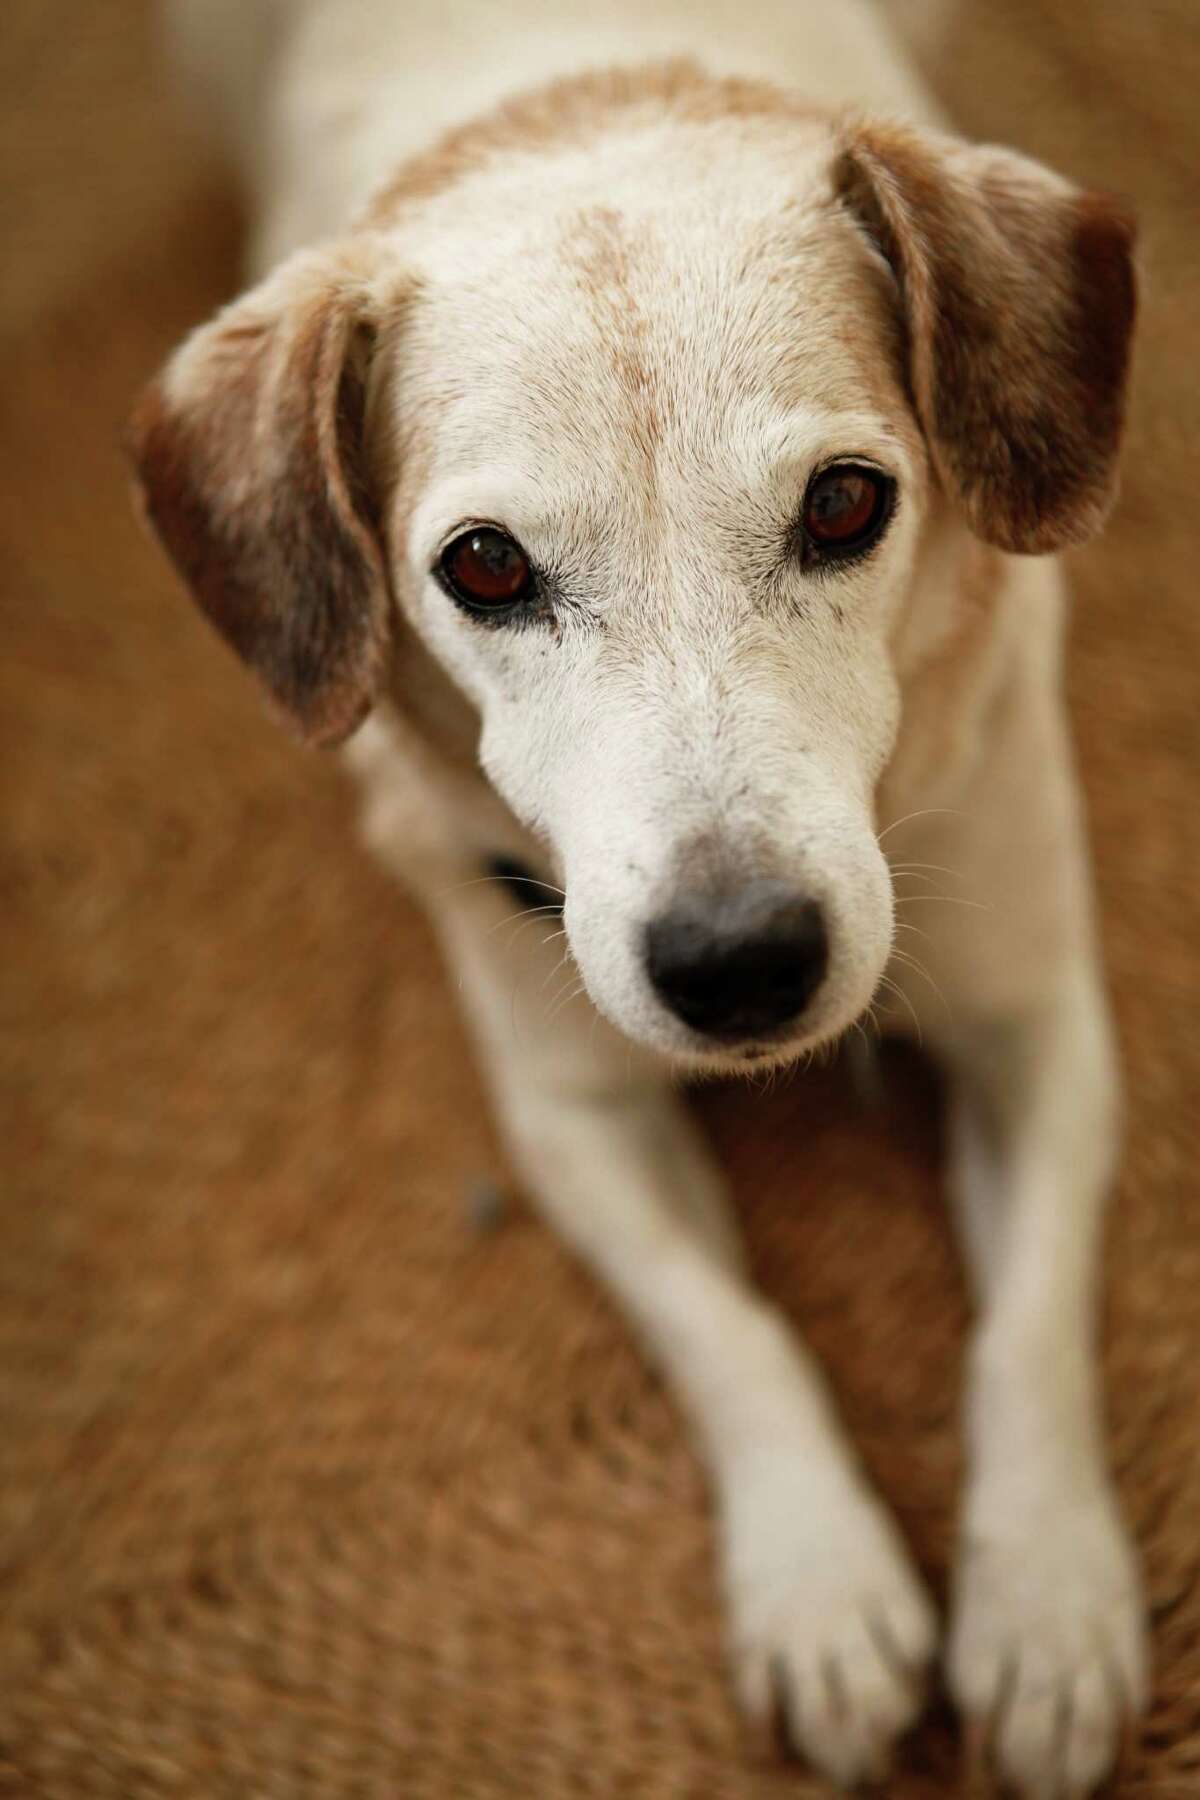 Designer Jess Brown's dog, Shorty, is seen on Thursday, Oct. 4, 2012 in her Petaluma, Calif., home studio.